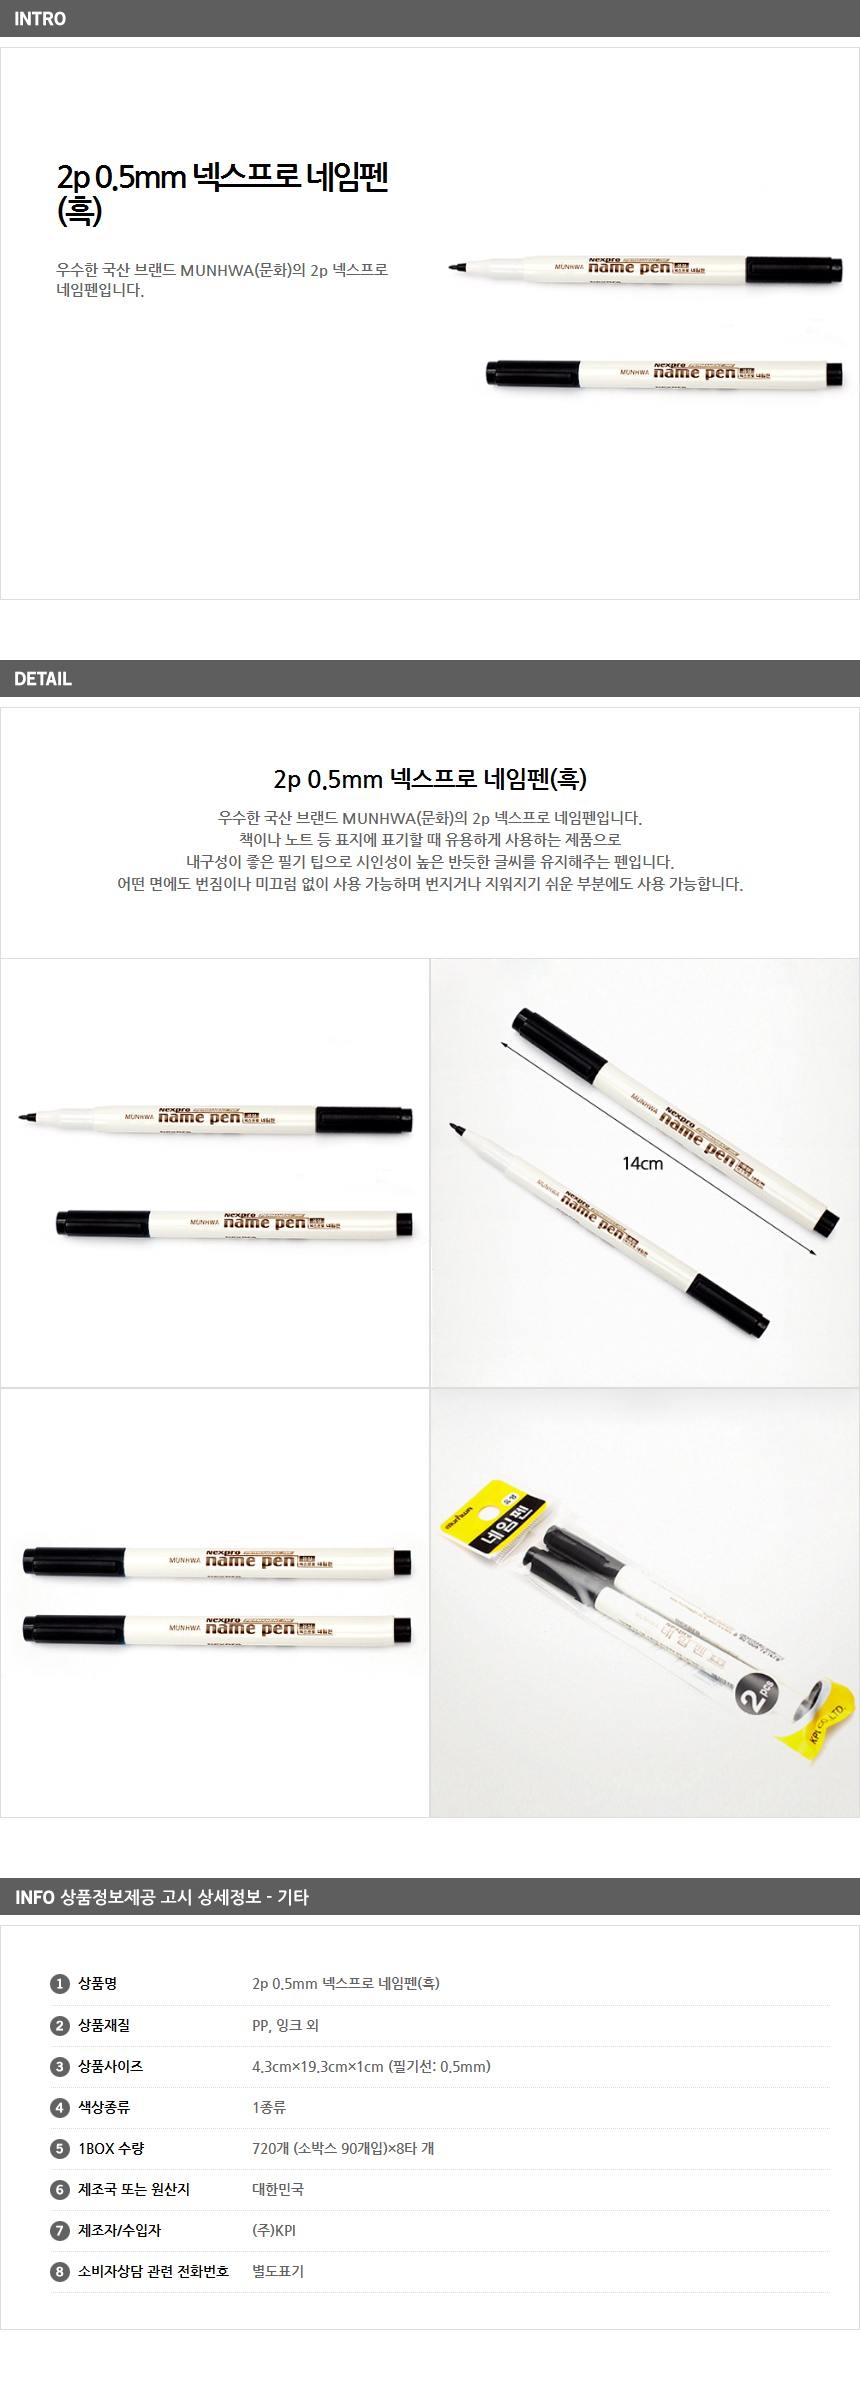 2p 0.5mm 검정색 넥스프로 네임펜 / 협회 판촉 싸인펜